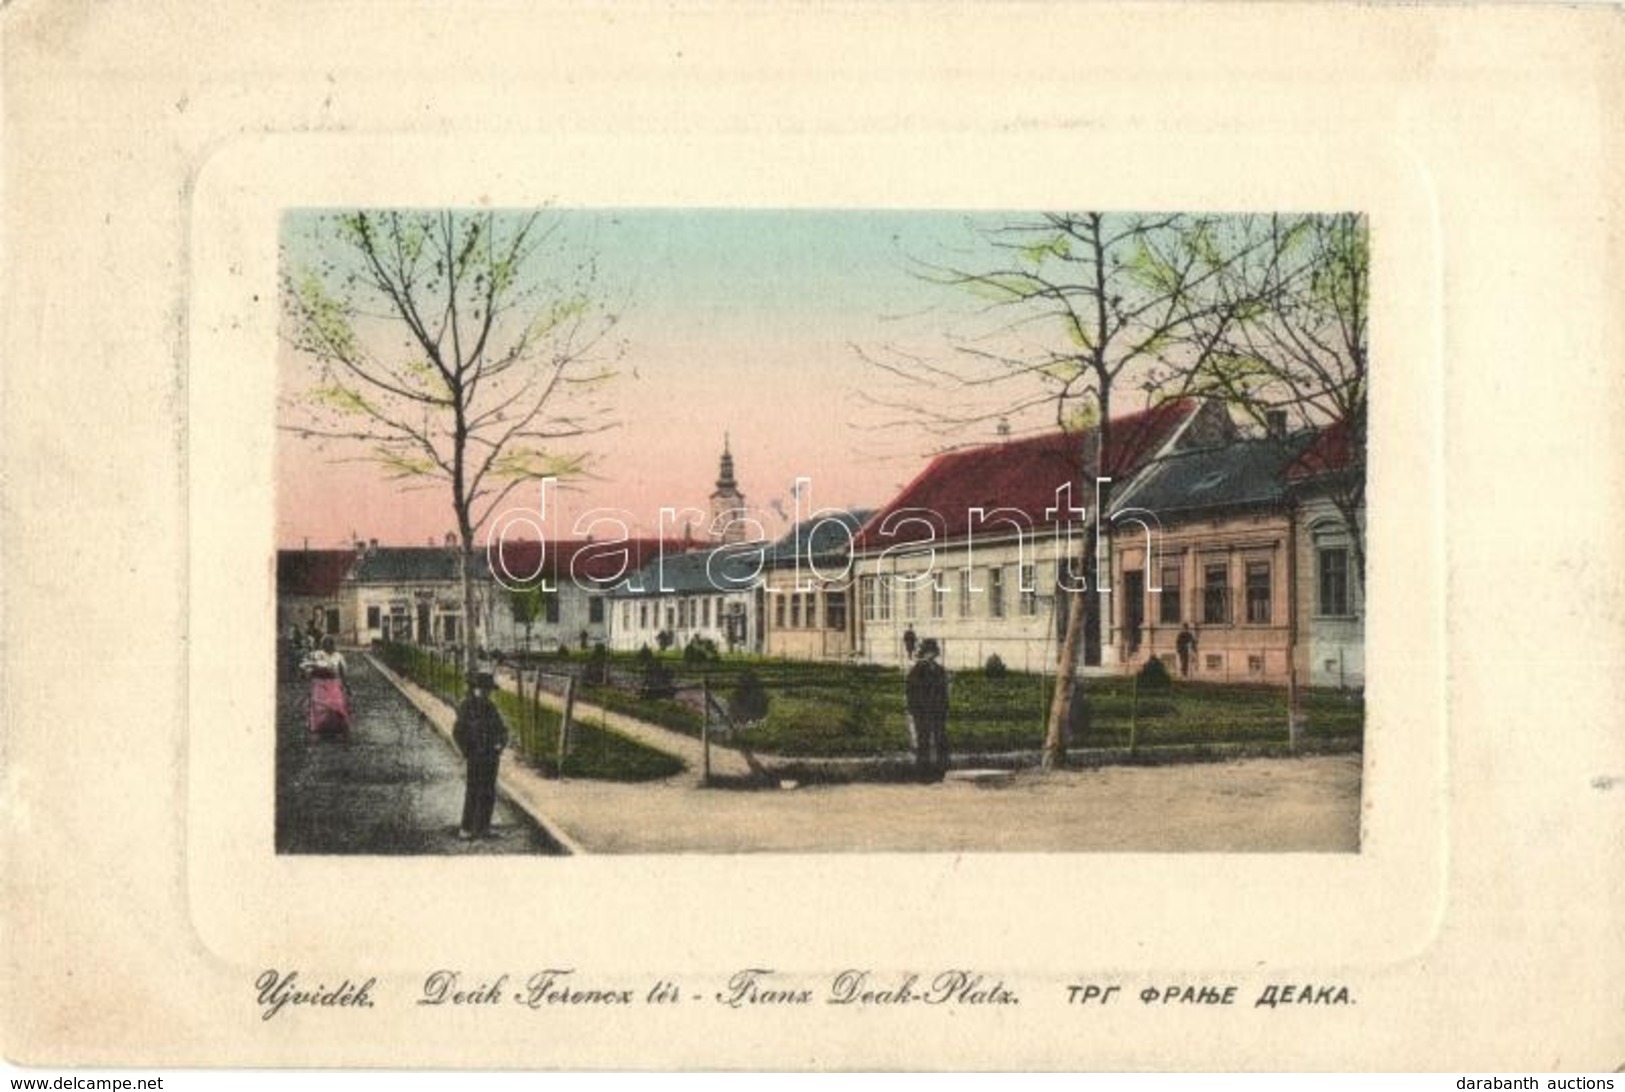 T2 1911 Újvidék, Novi Sad; Deák Ferenc Tér. W.L. Bp. 4236. / Square - Ohne Zuordnung